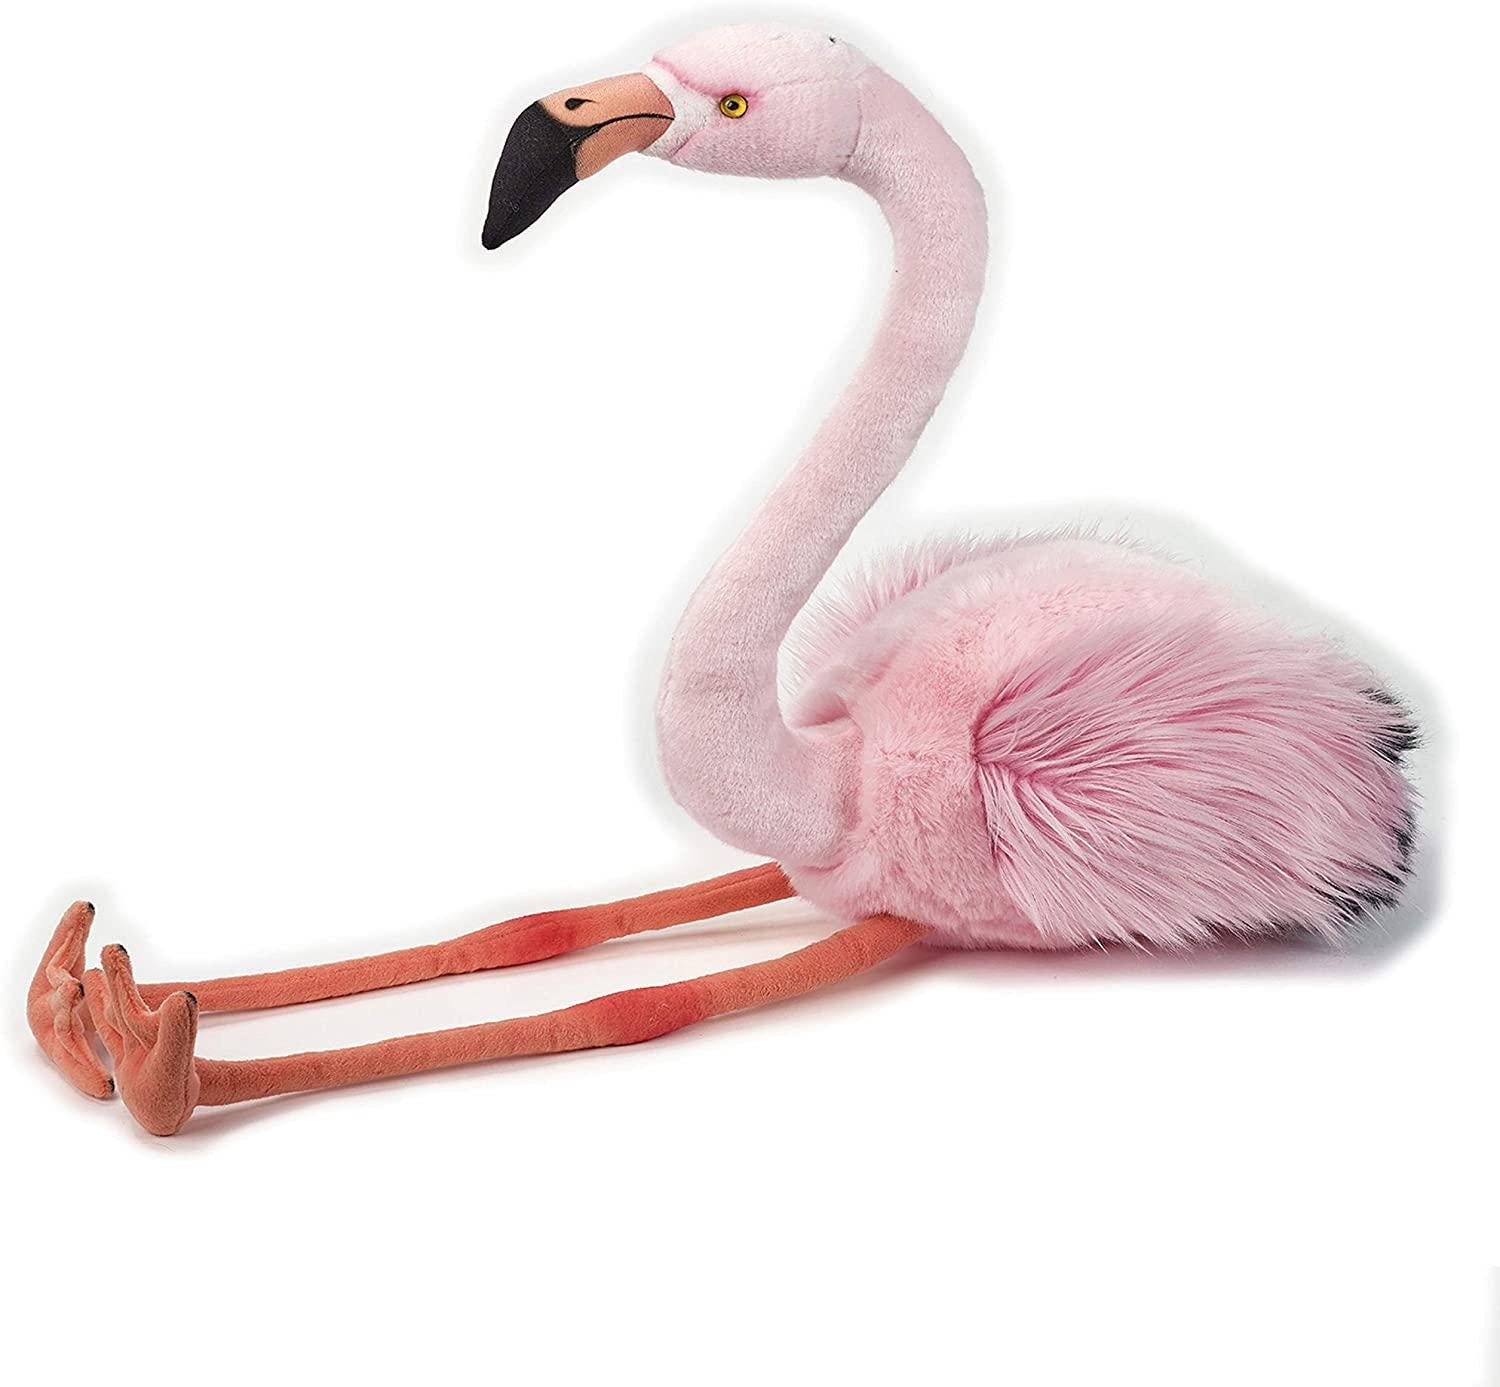 National Geographic, Lelly - National Geographic Plush, Giant Flamingo